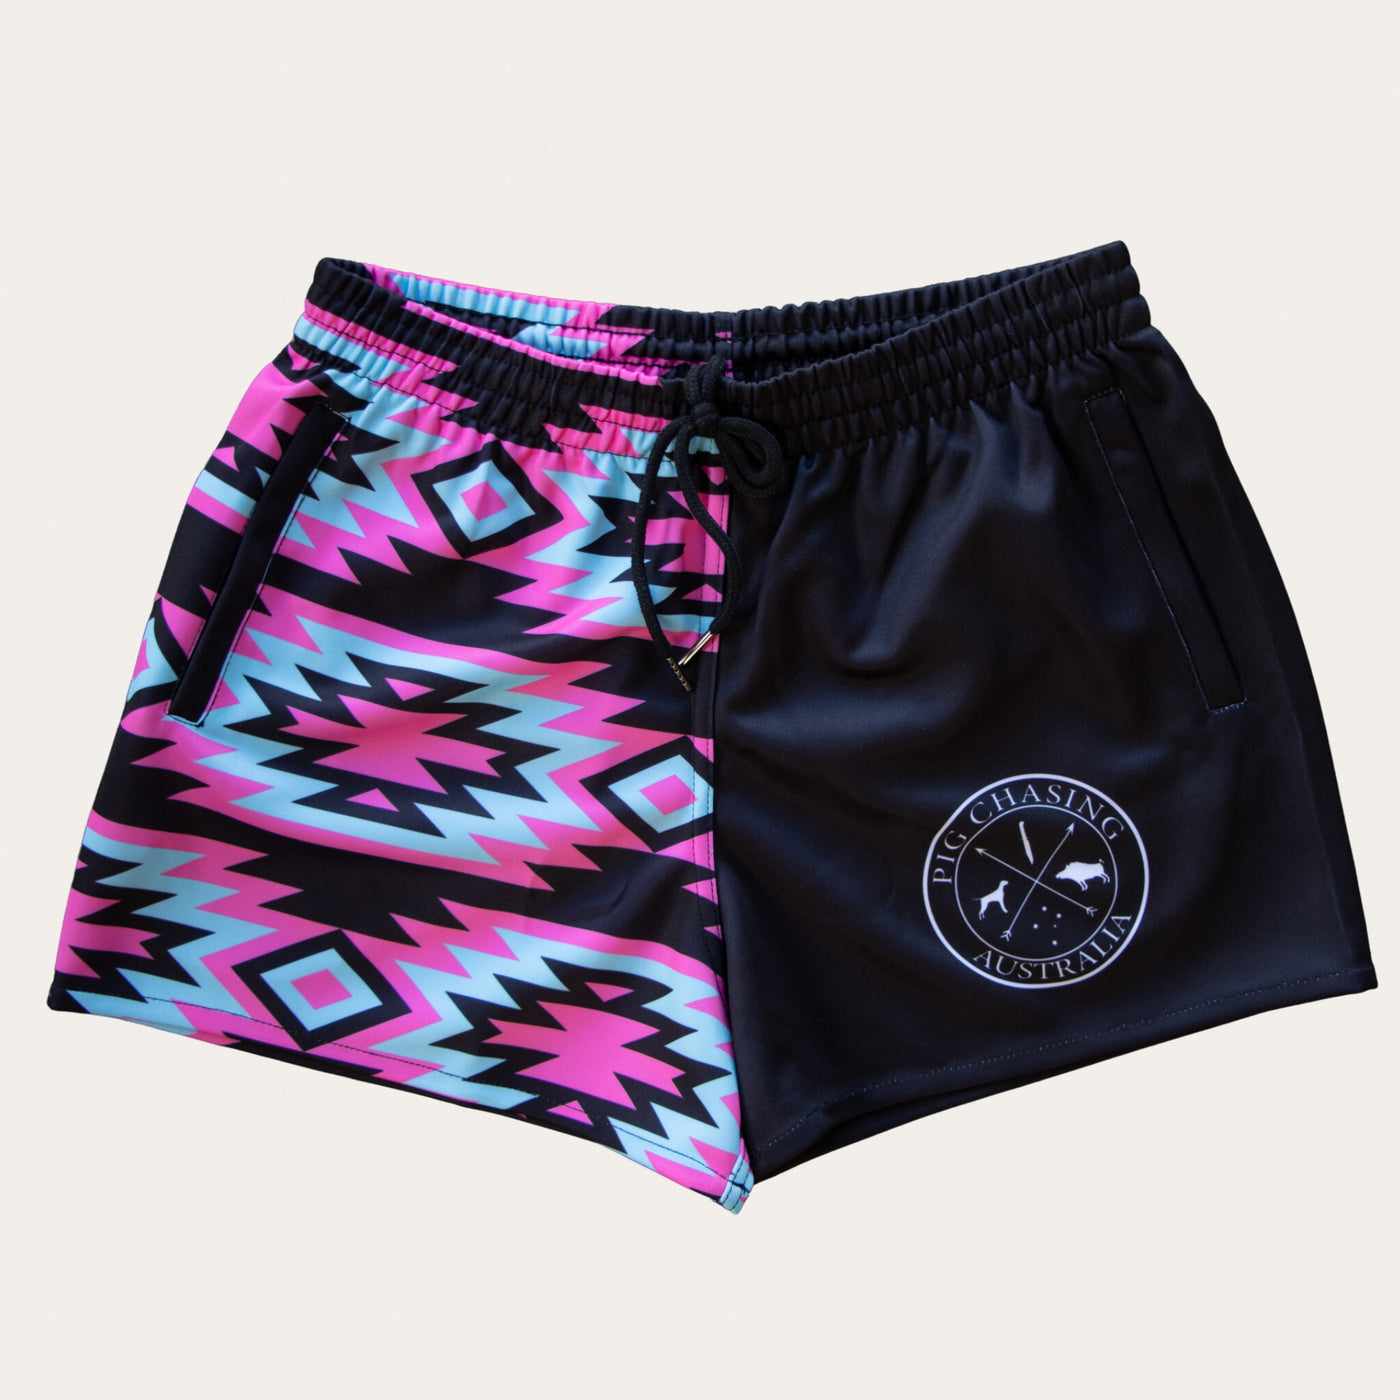 Footy Shorts - Pink/Black Aztec - ZIP Pockets!